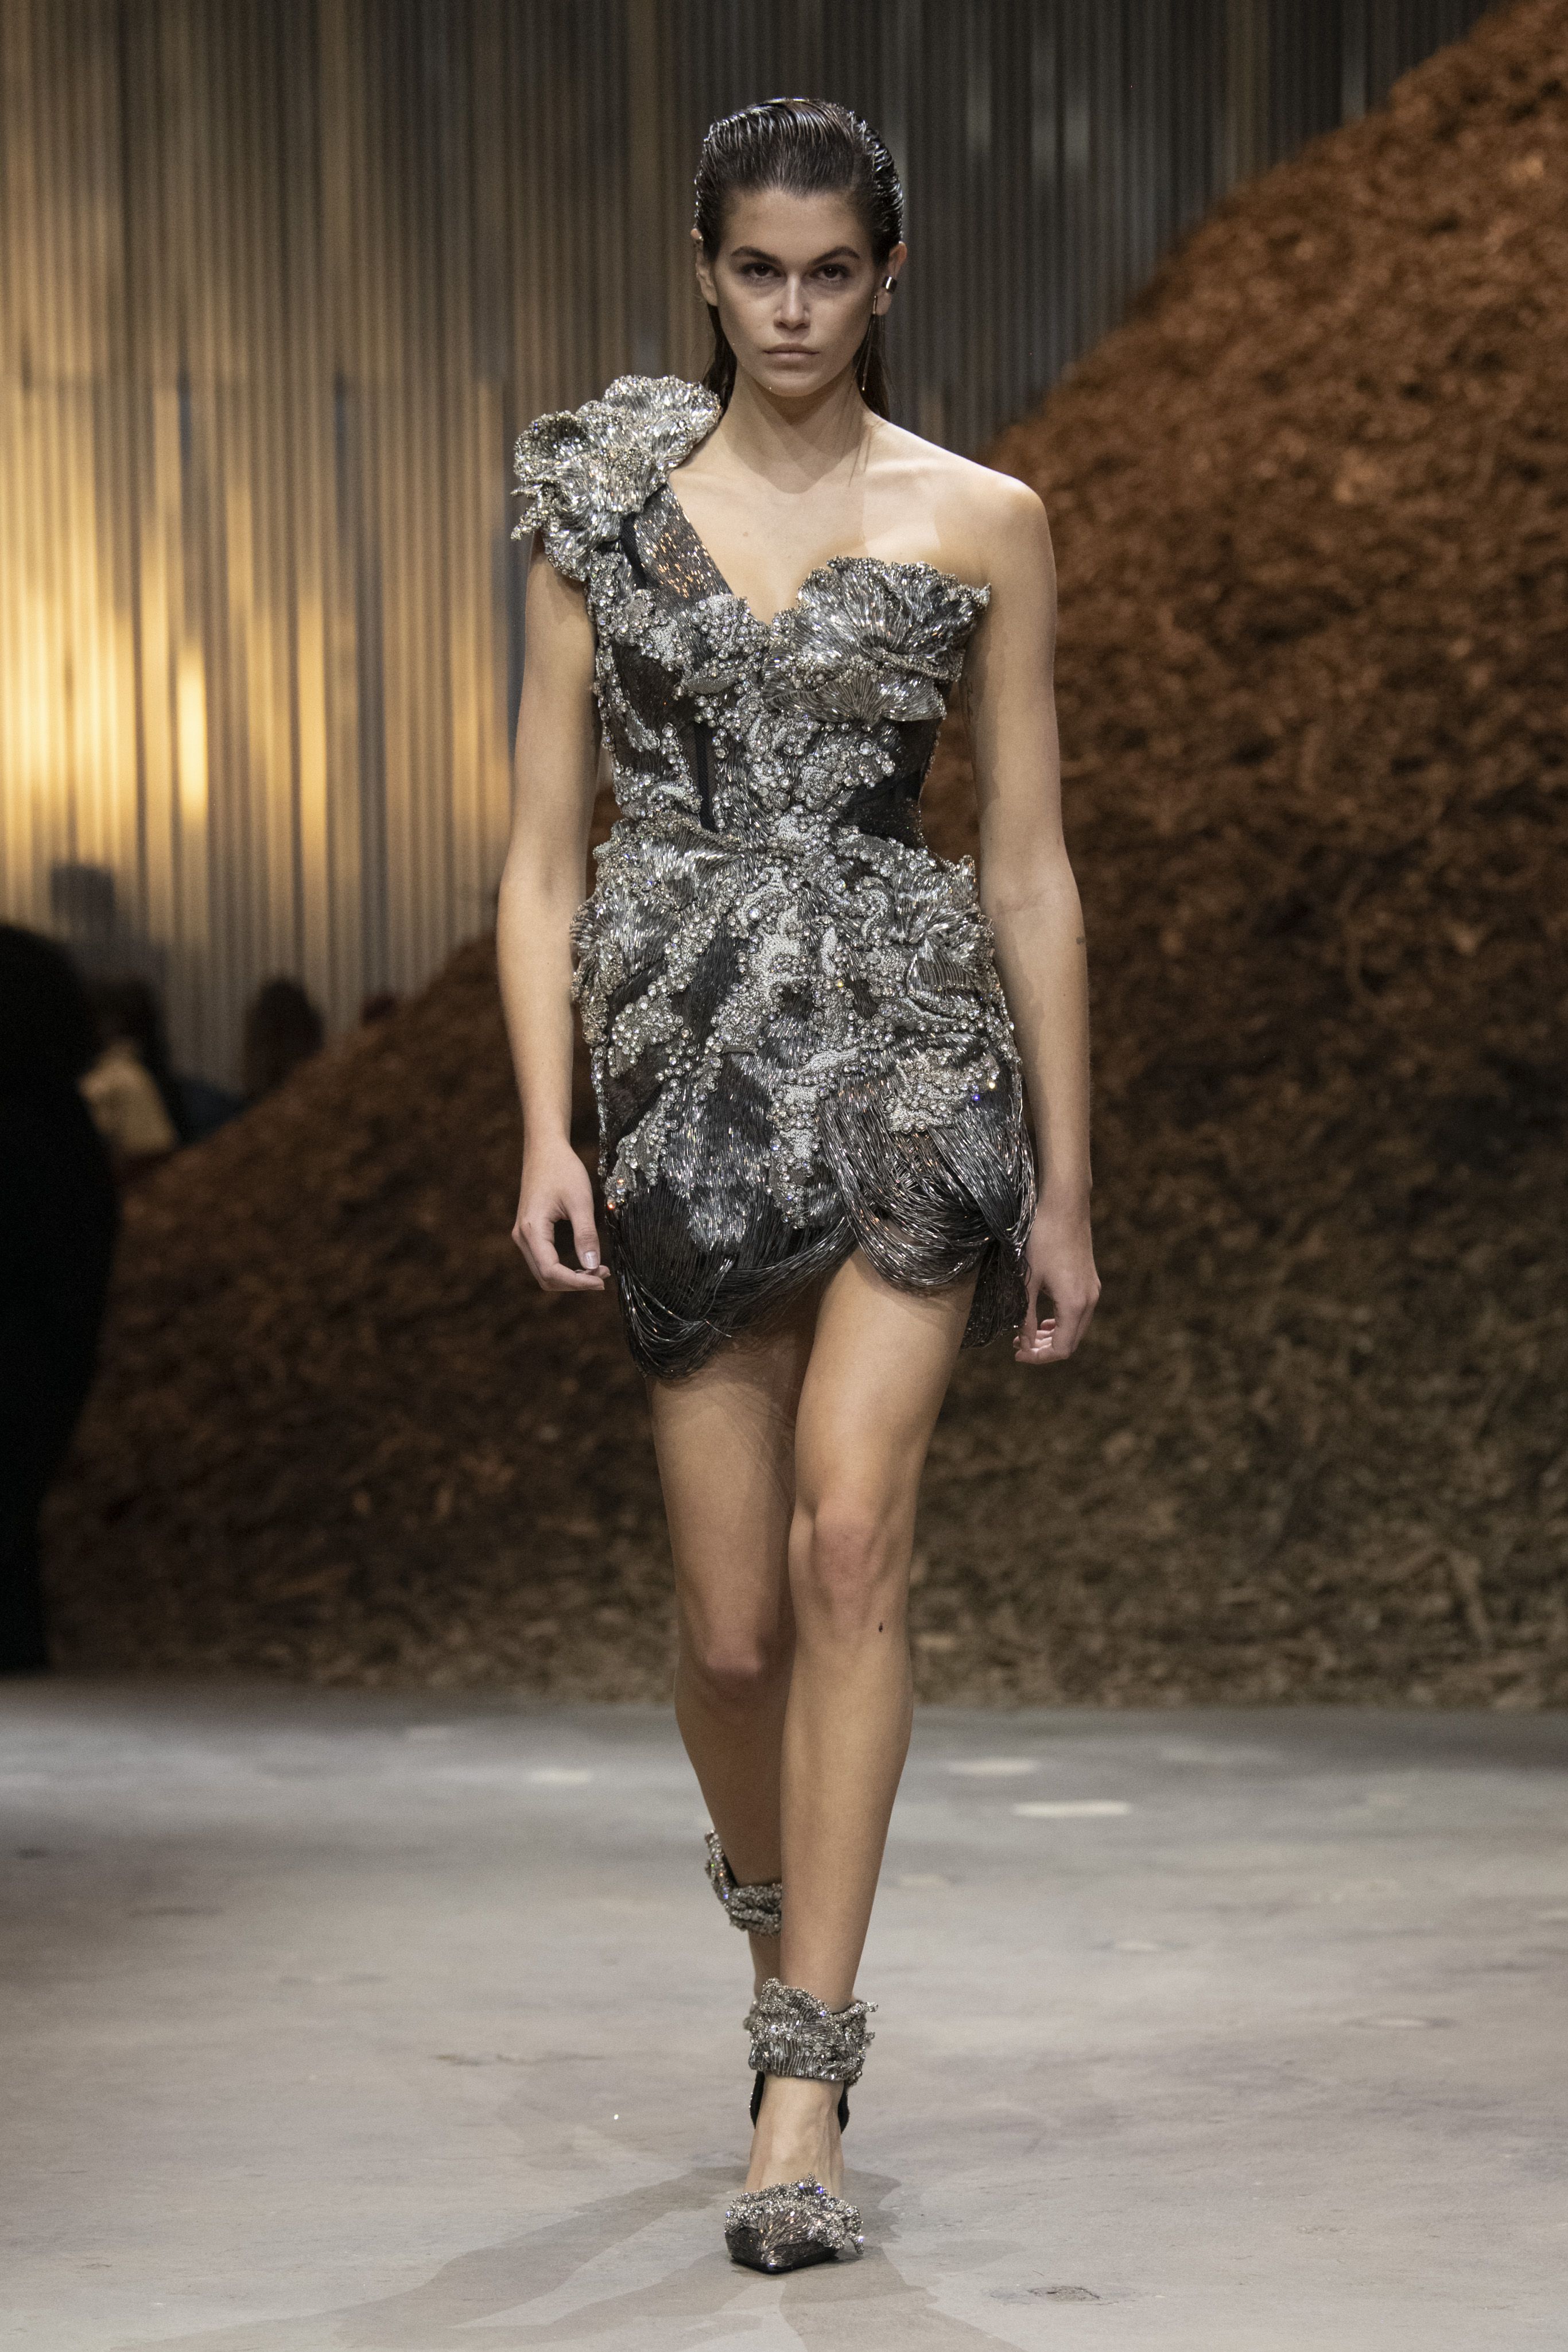 Kaia Gerber Transforms For Givenchy & Valentino at Paris Fashion